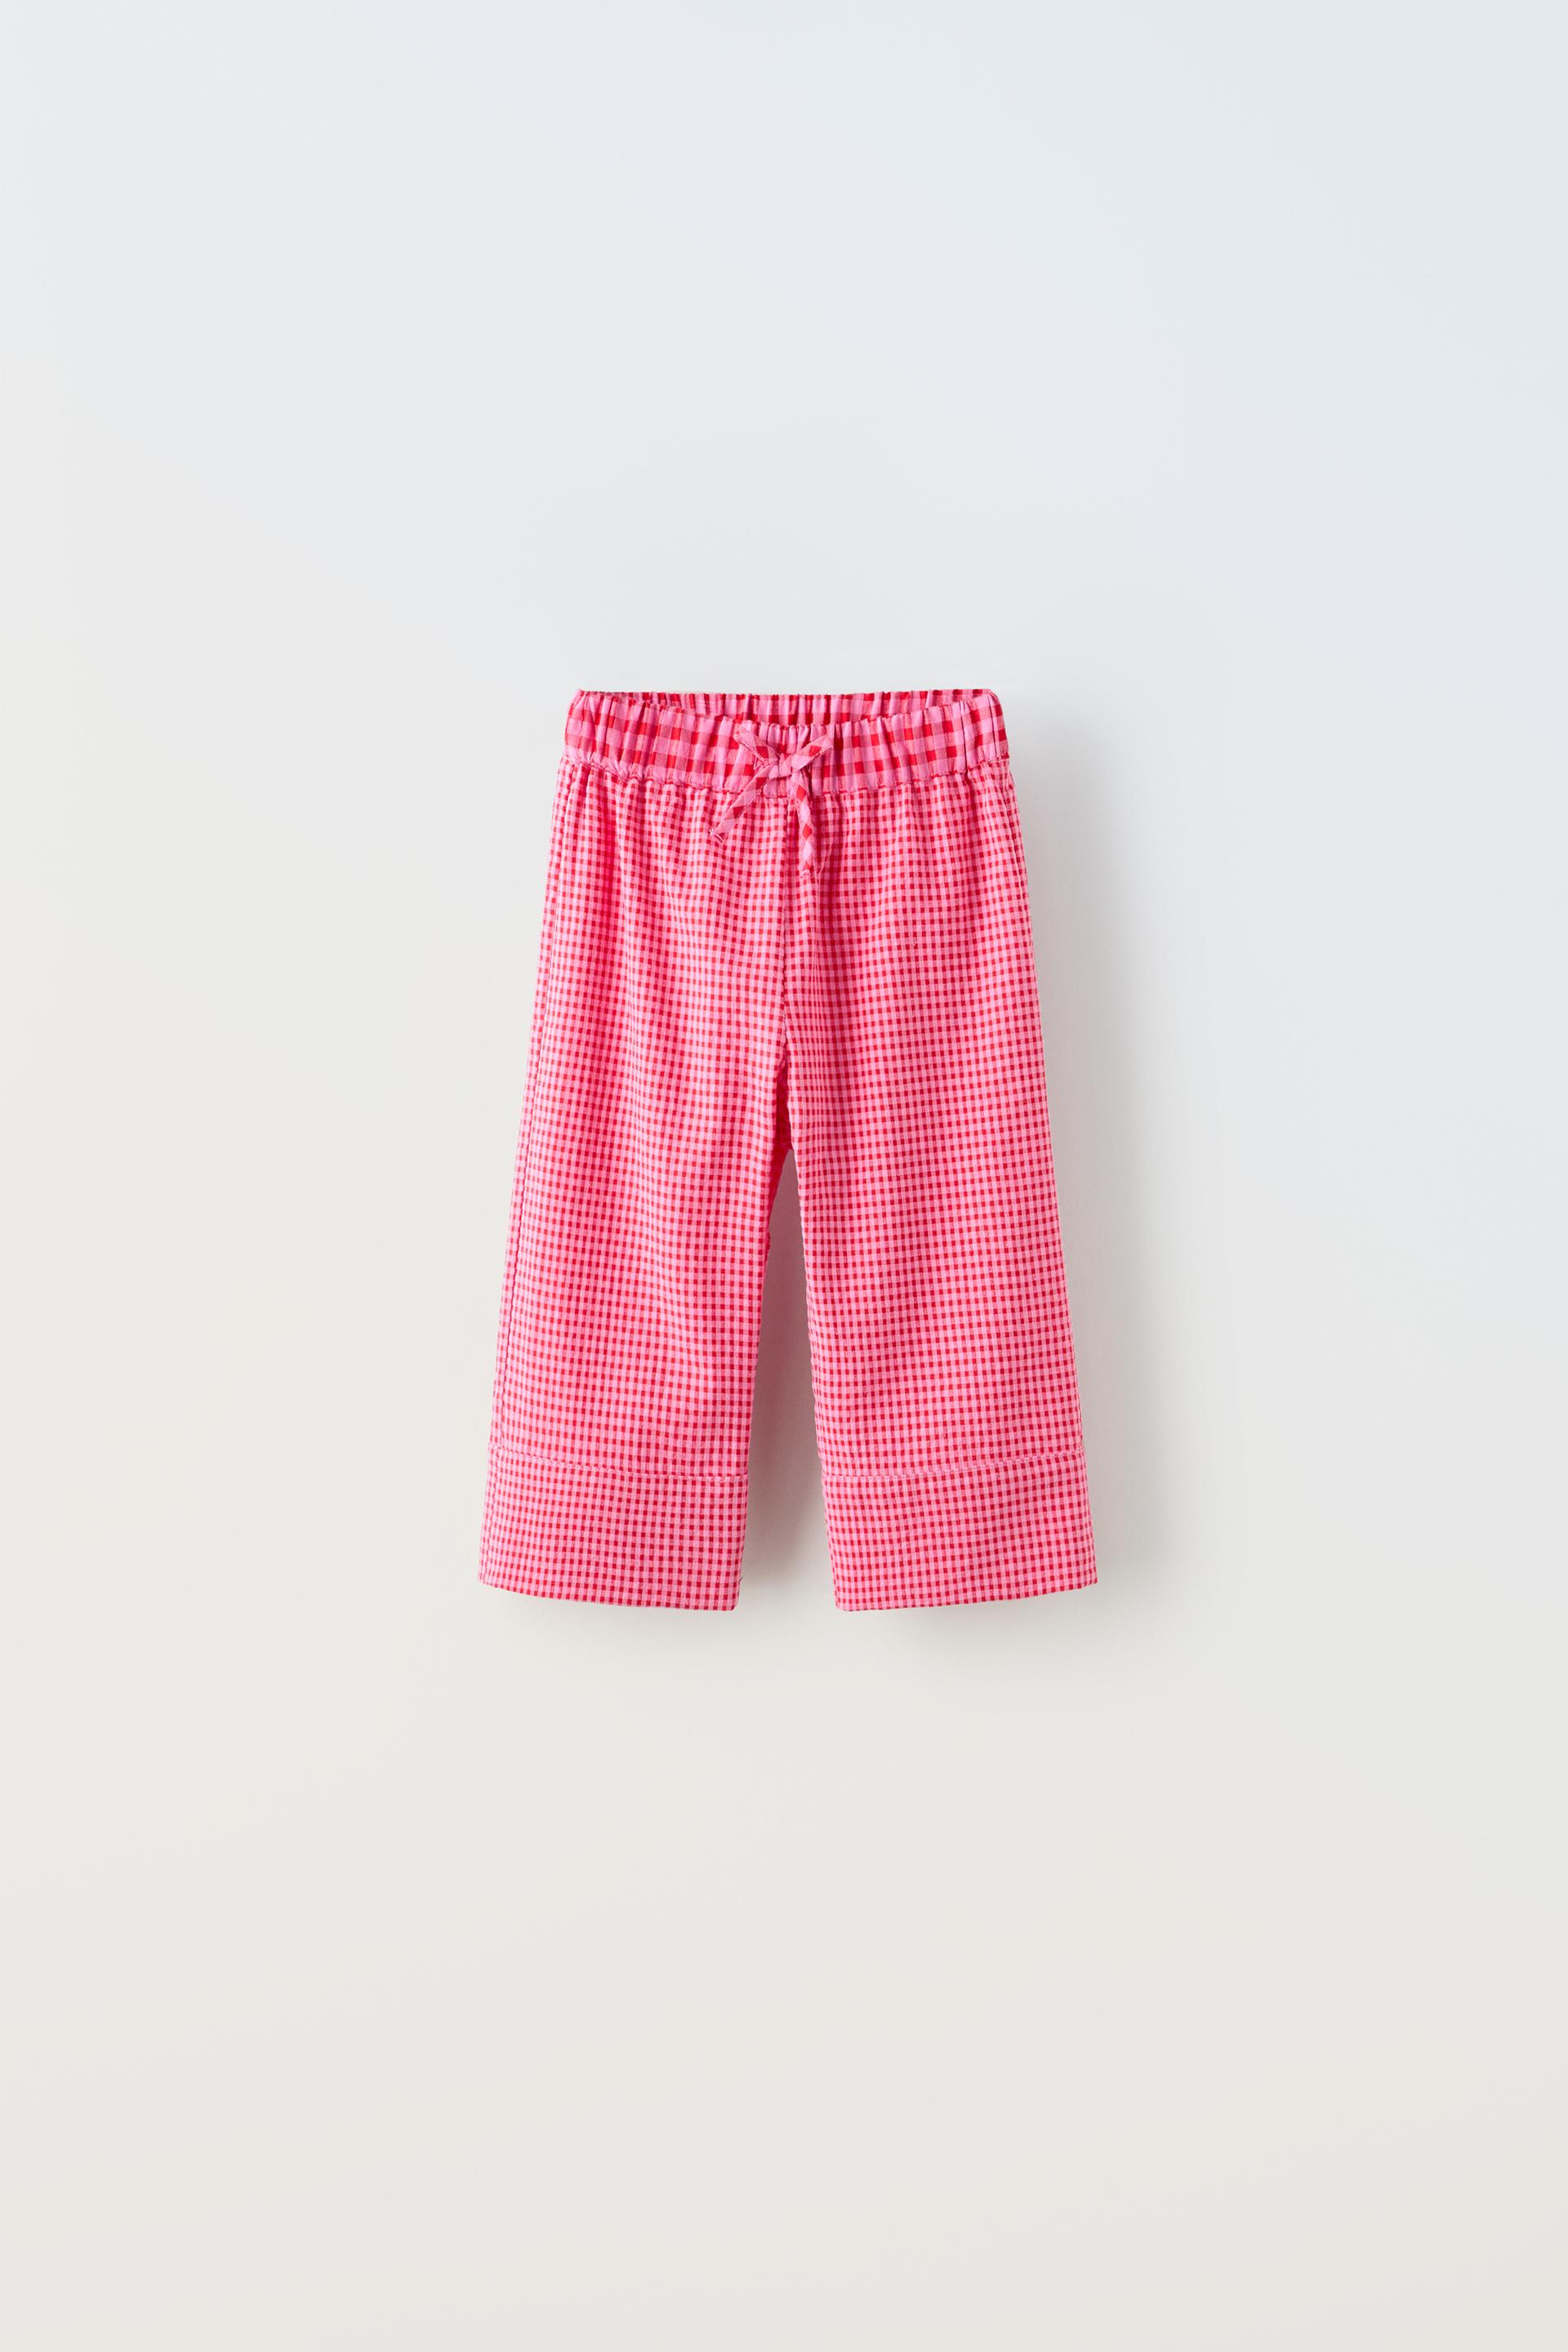 Zara red check pants small – Coco's Cabin